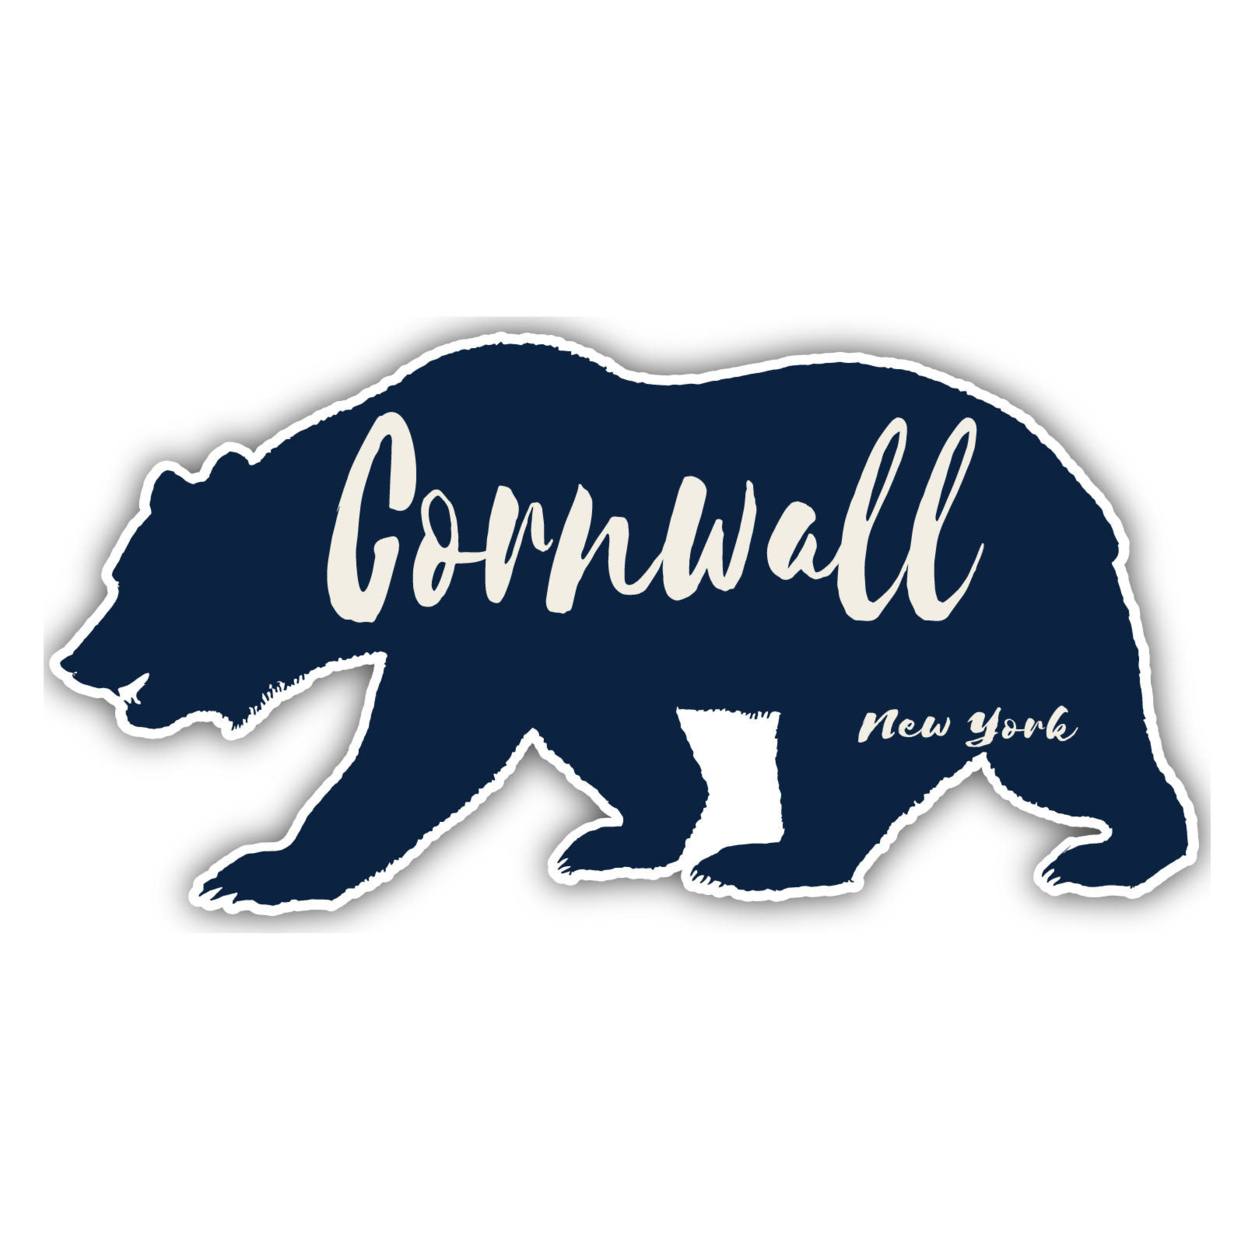 Cornwall New York Souvenir Decorative Stickers (Choose Theme And Size) - Single Unit, 8-Inch, Bear